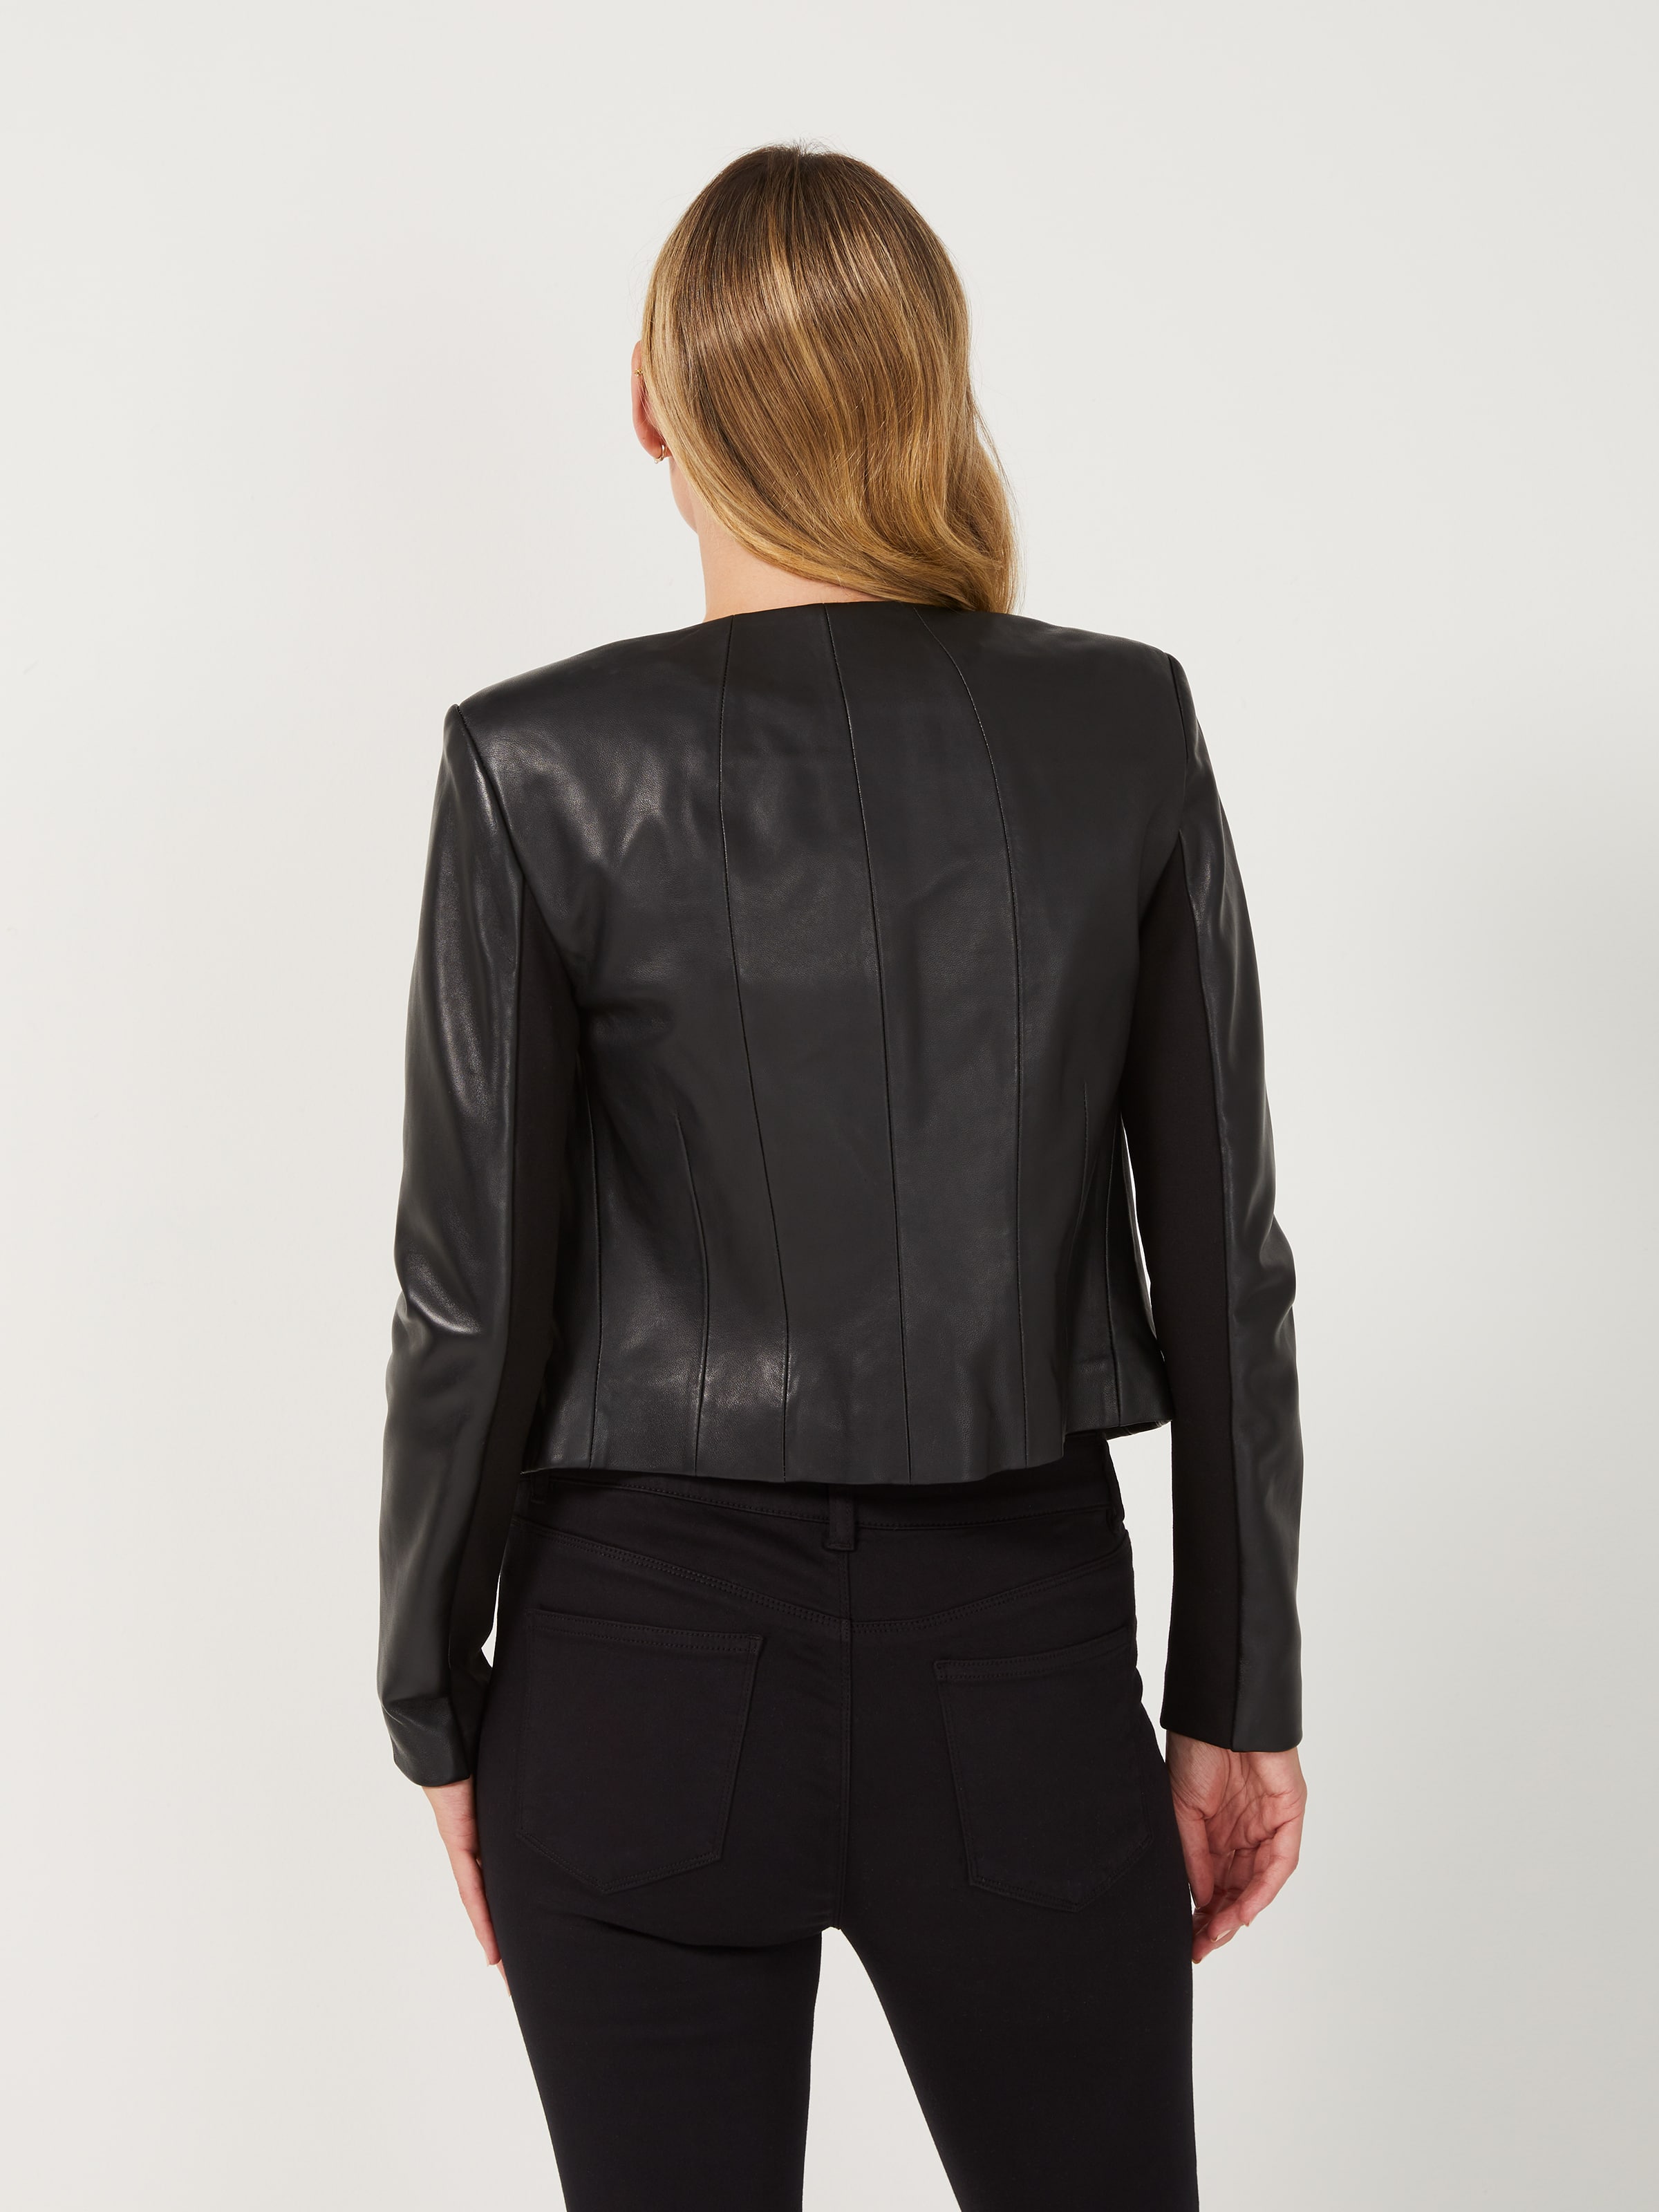 120 Best Black Leather Jacket ideas